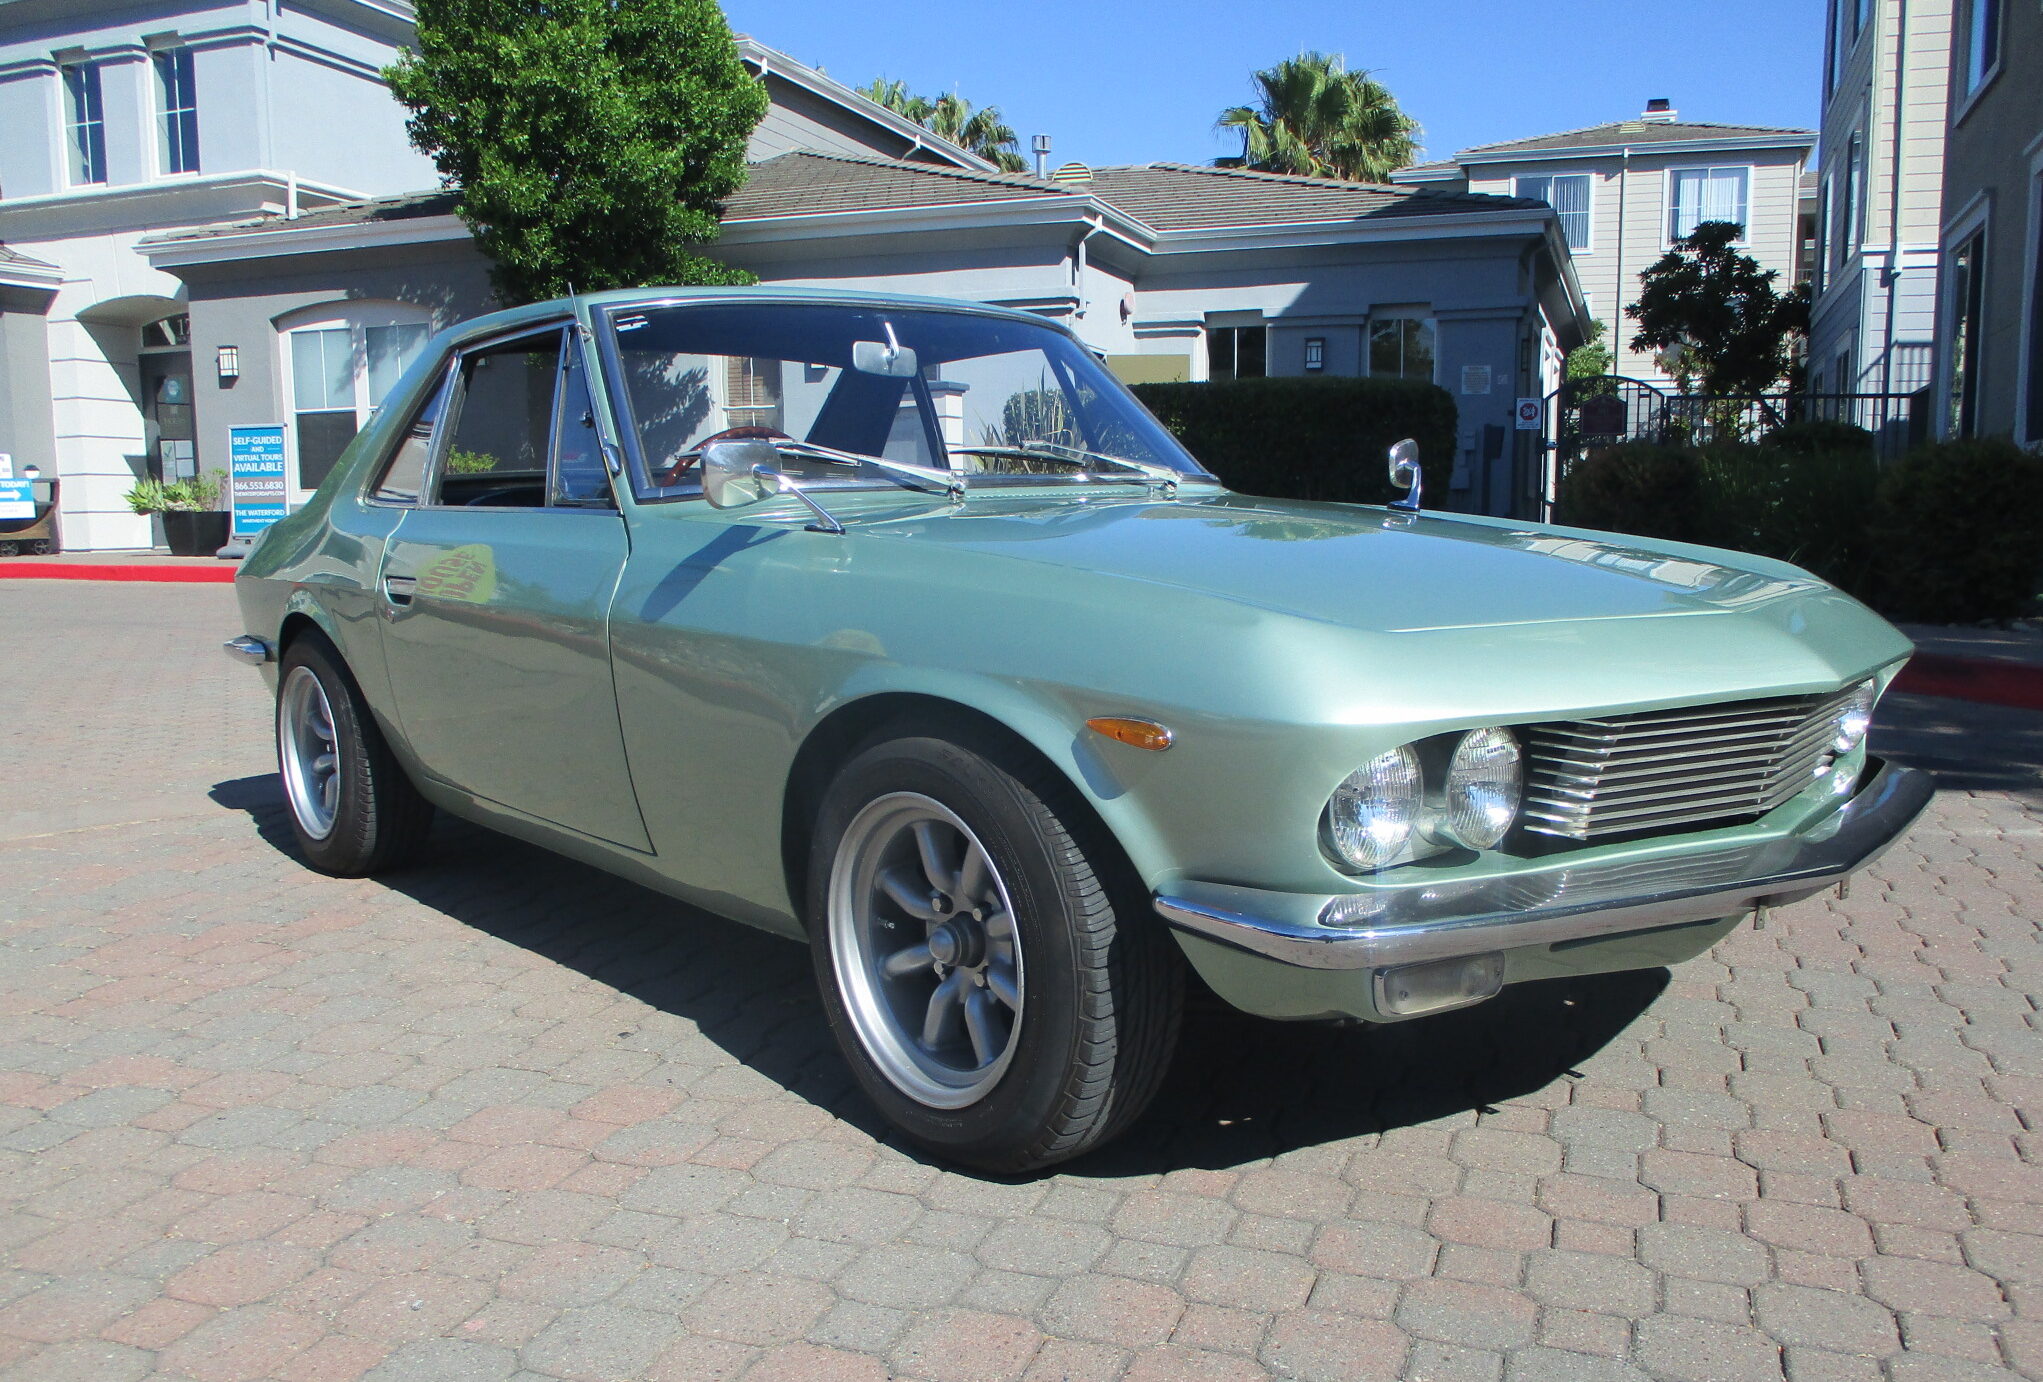 Z-Car Blog » Post Topic » Rick's 1965 Nissan Silvia